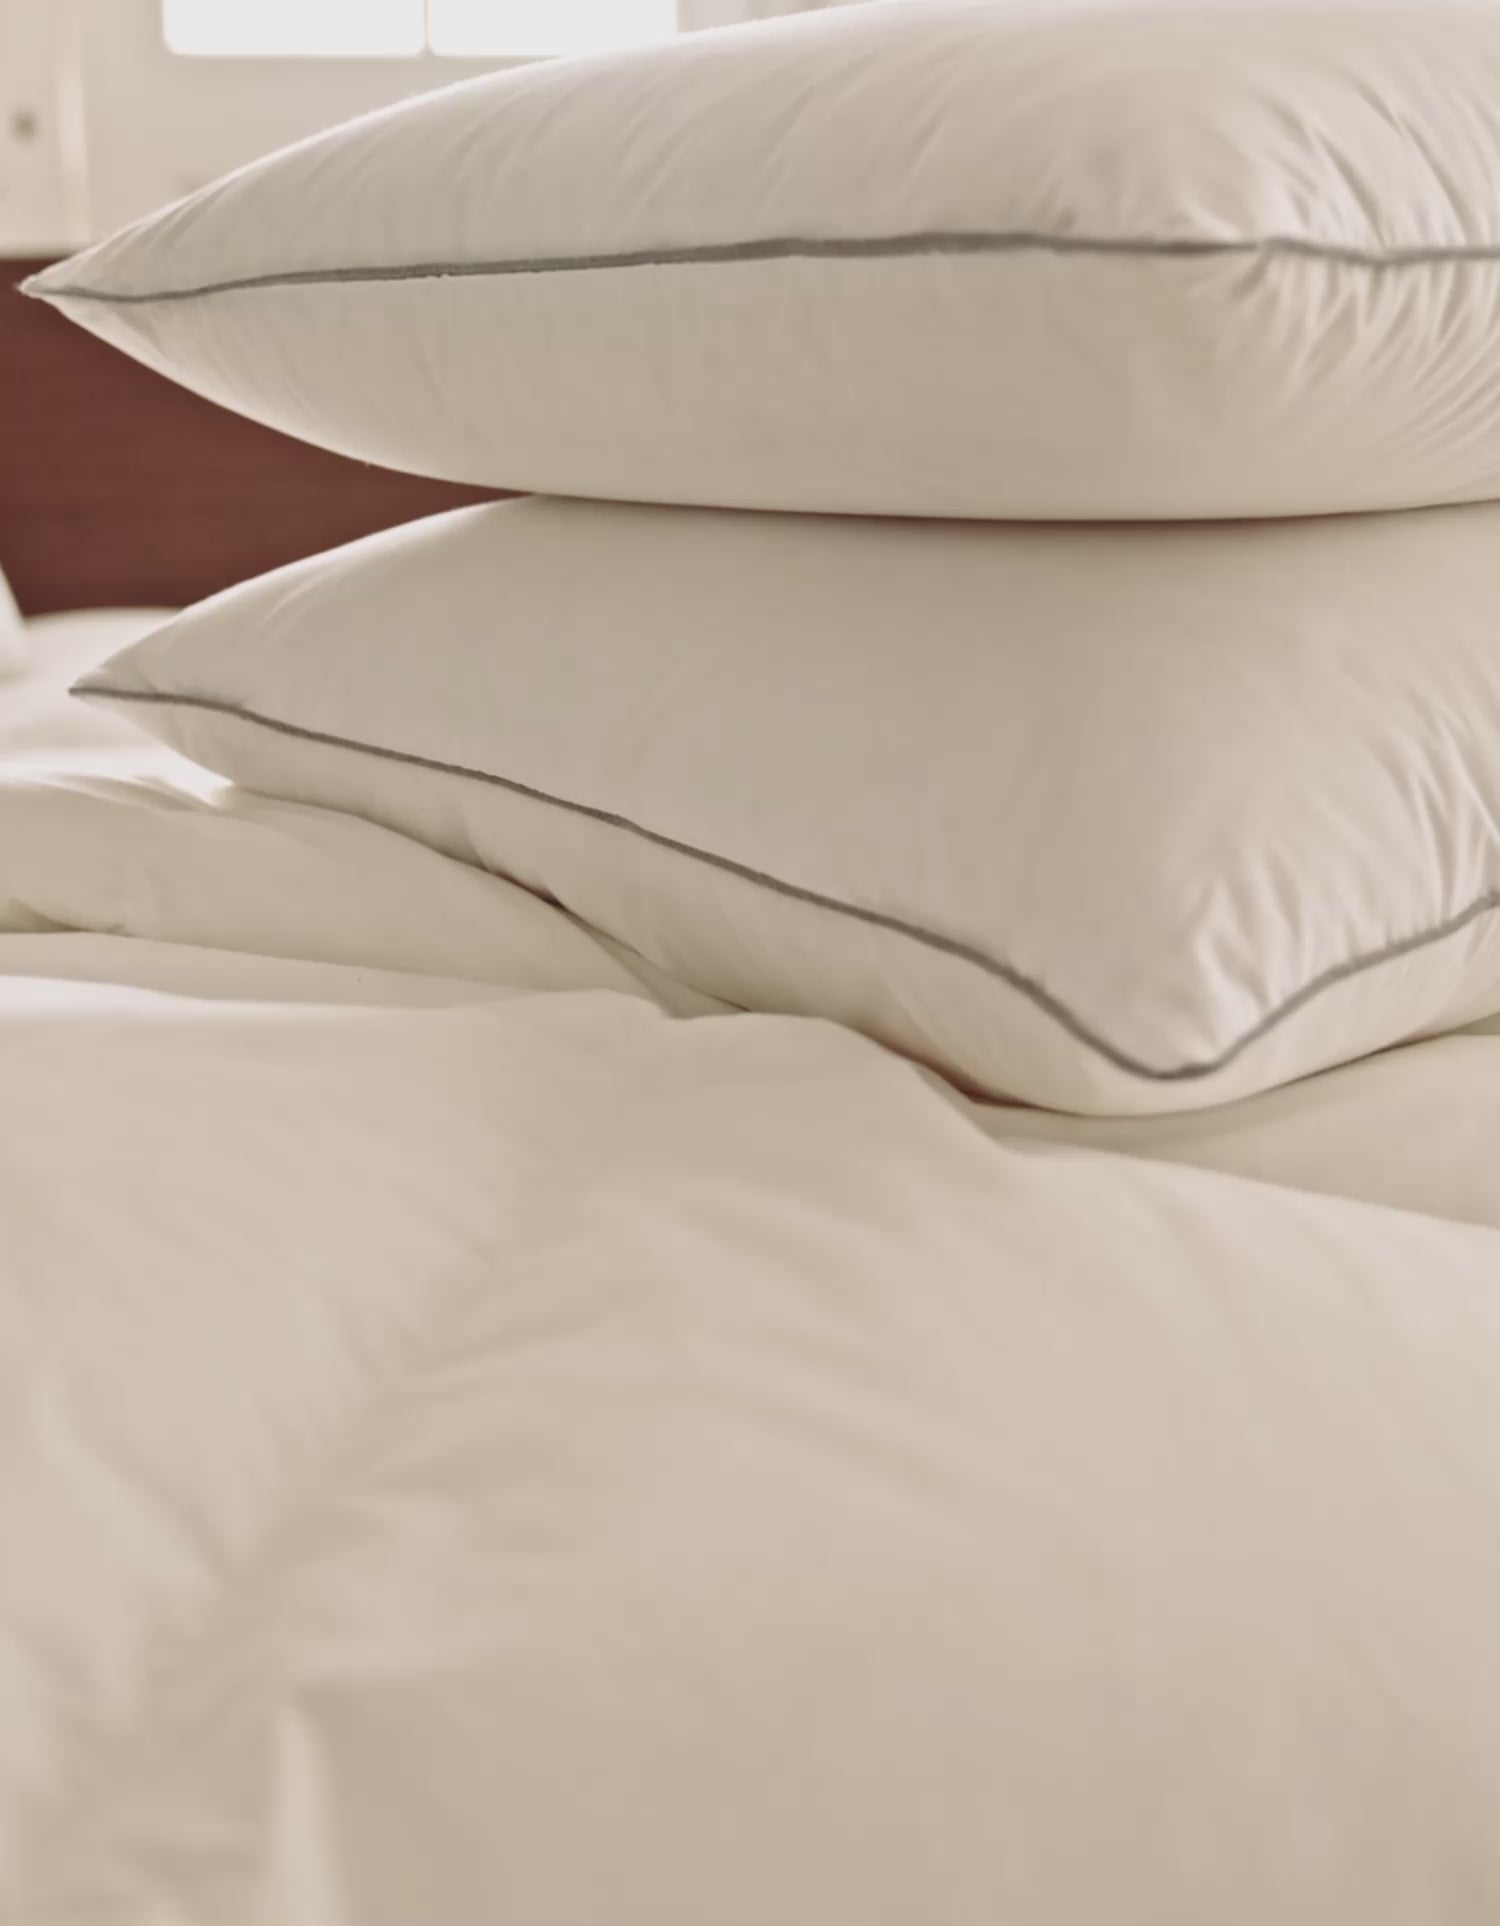 Comment choisir un oreiller anti-transpiration - Bonsoirs